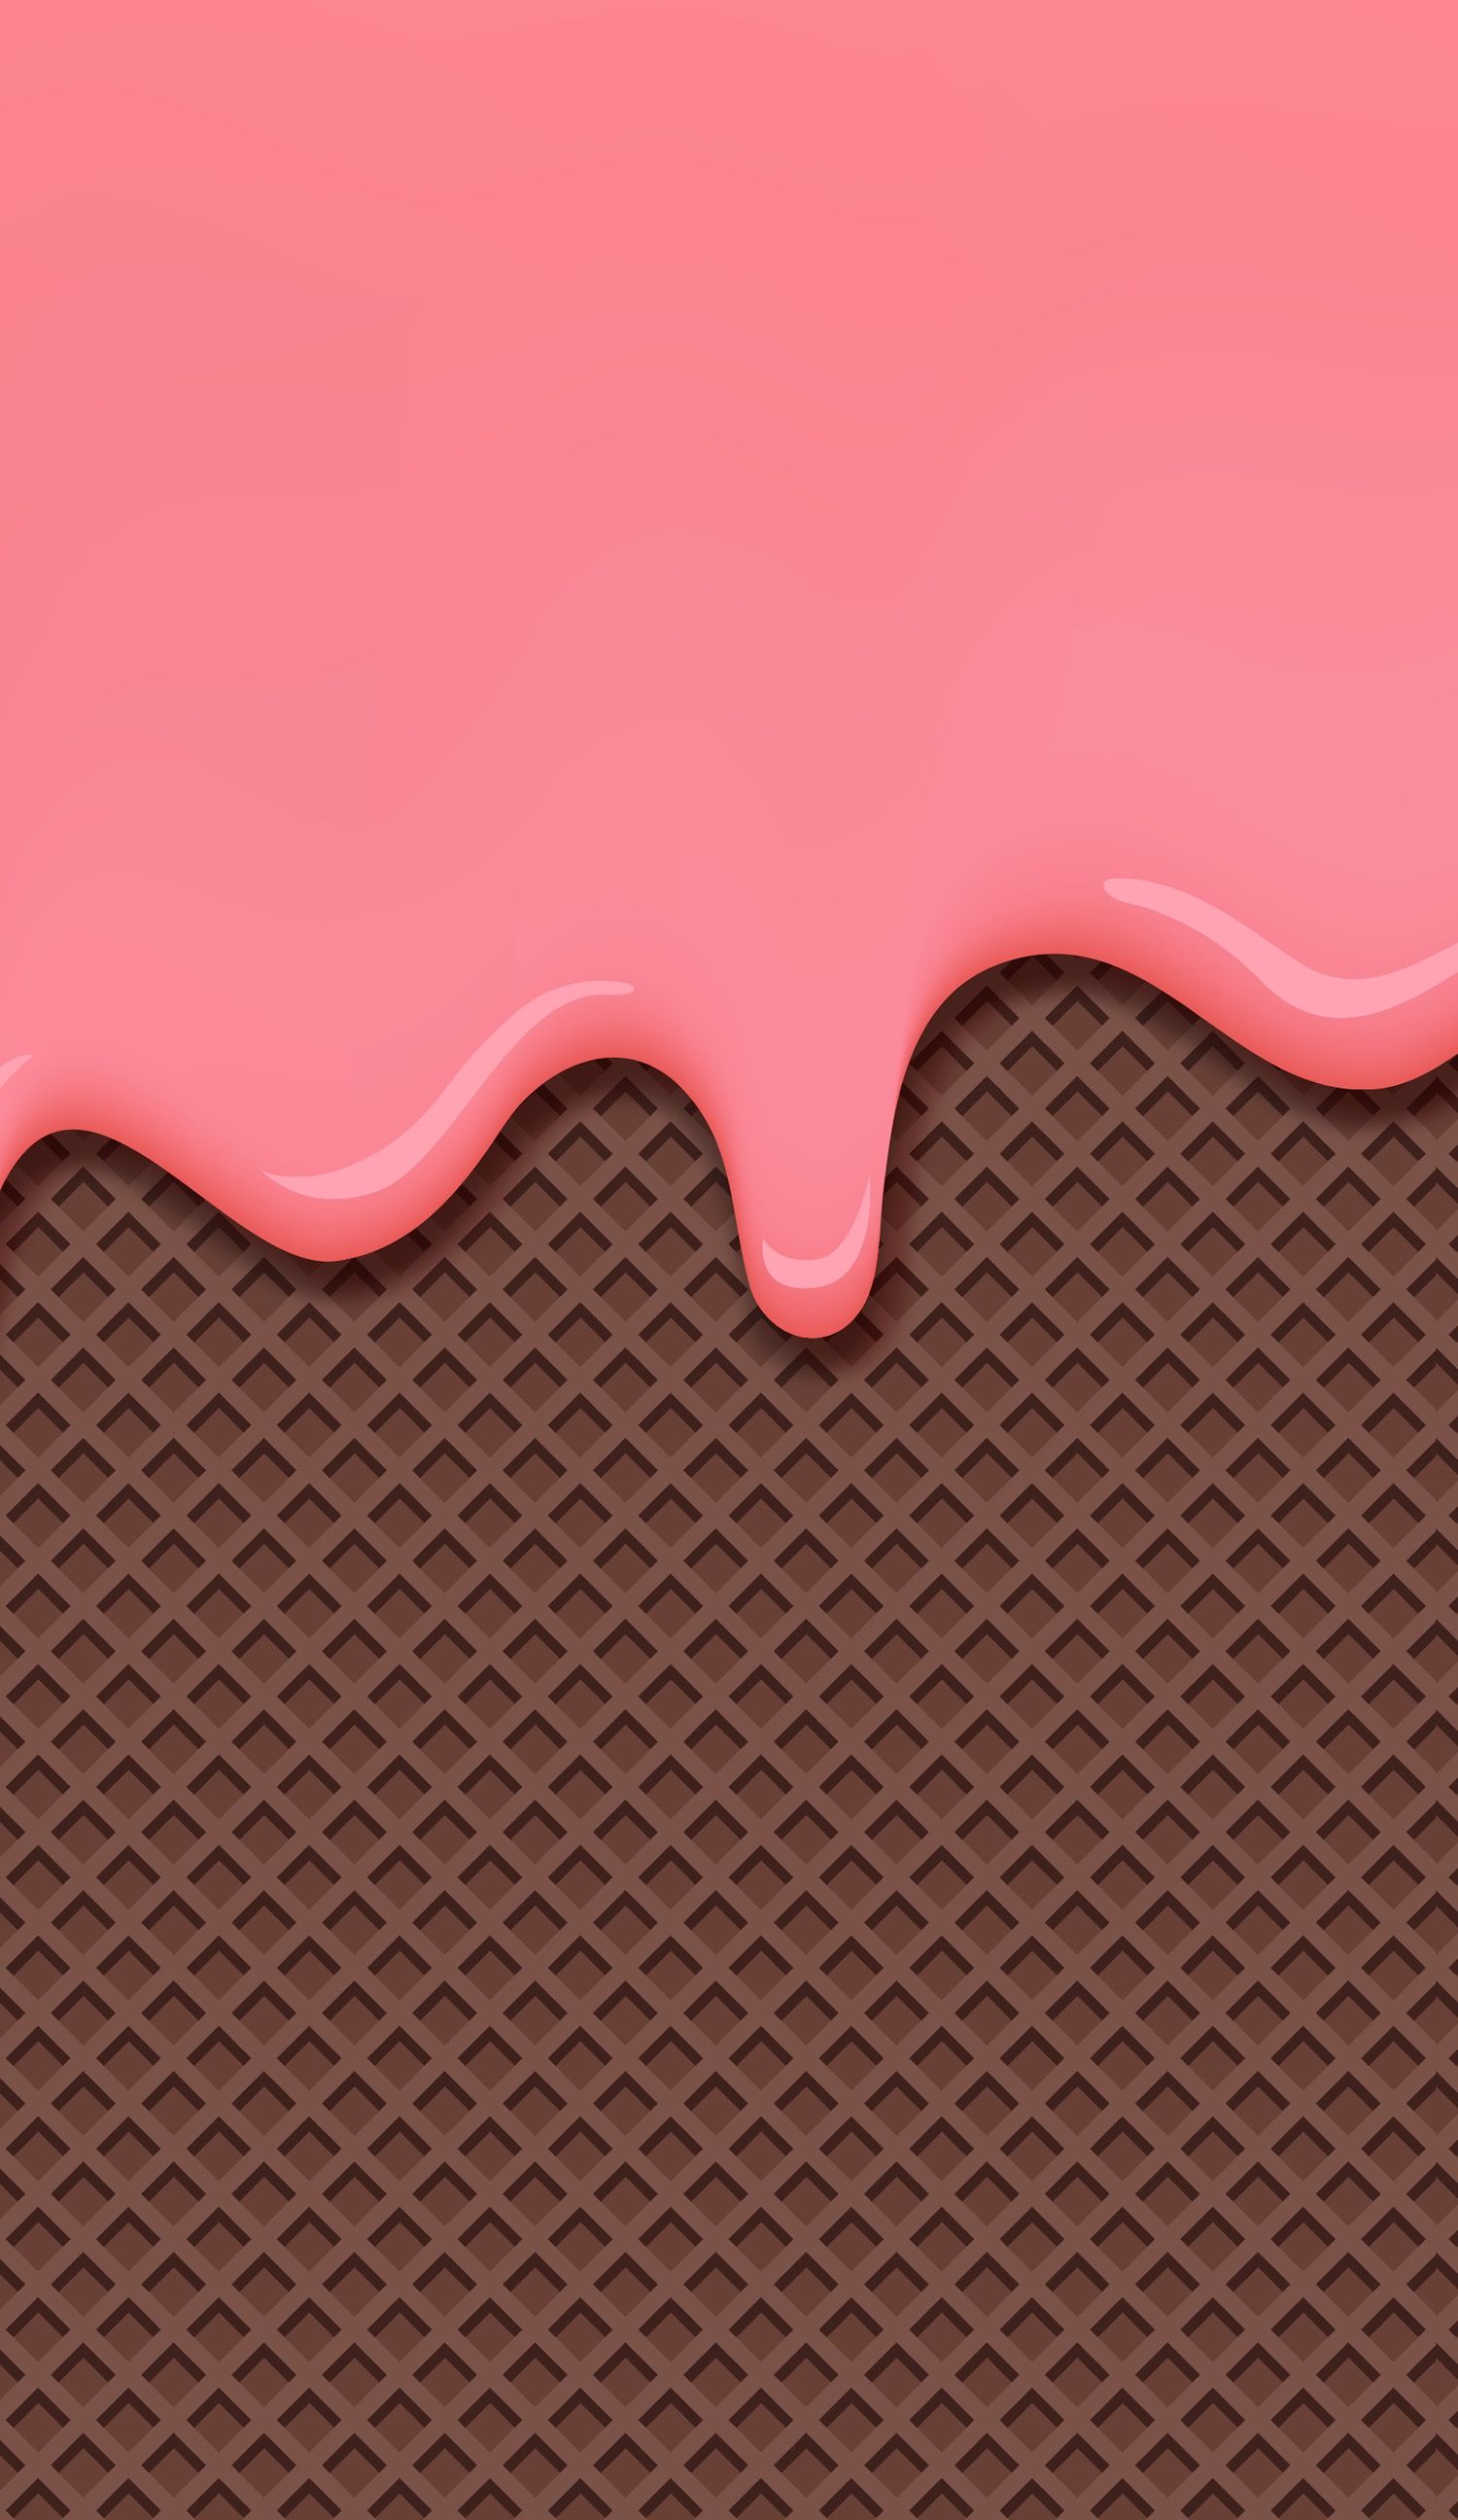 ipad mini wallpaper tumblr,rosa,rot,fliese,muster,design